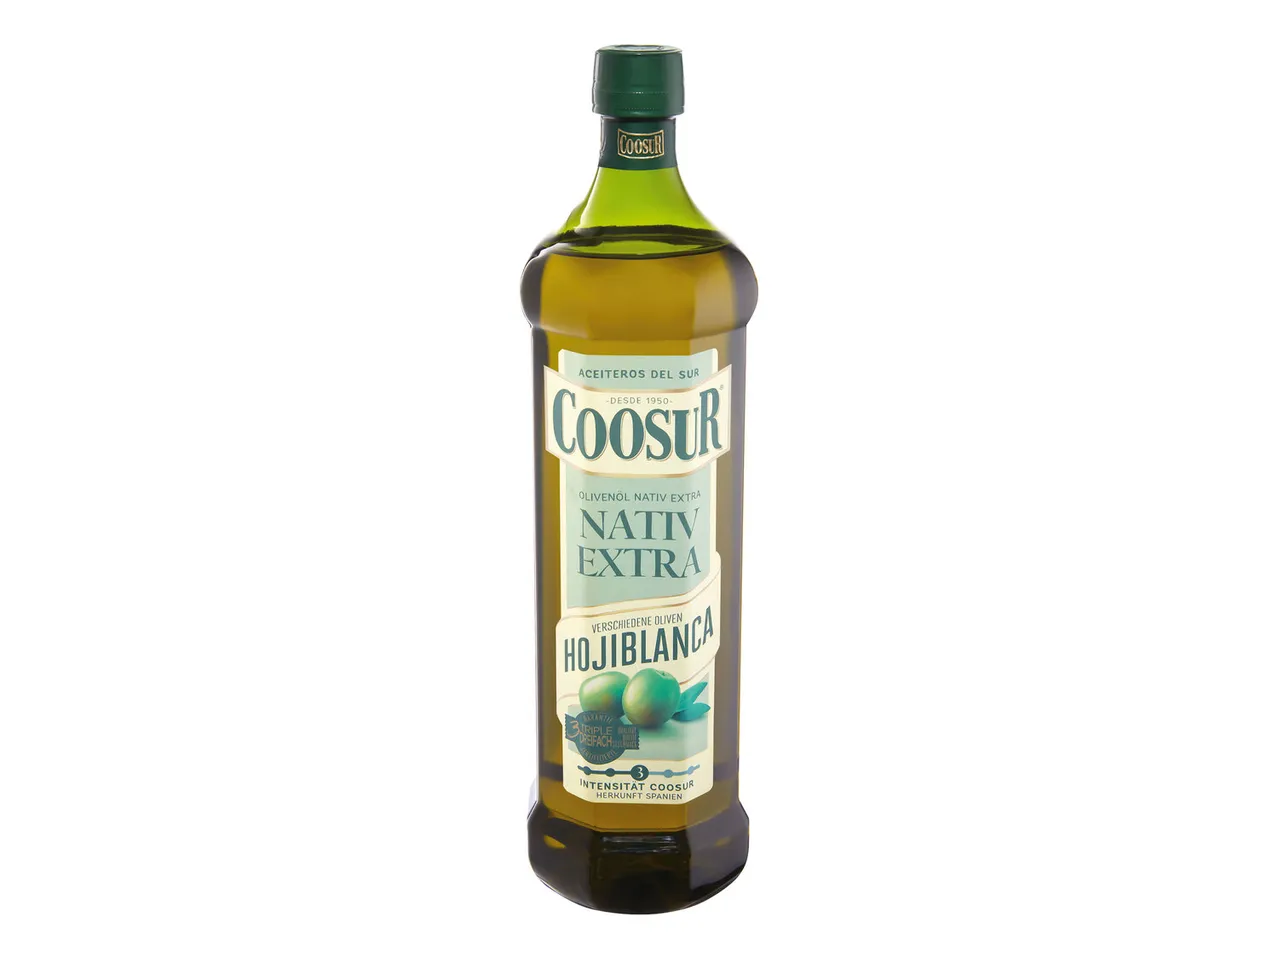 Olivenöl Hojiblanca Coosur